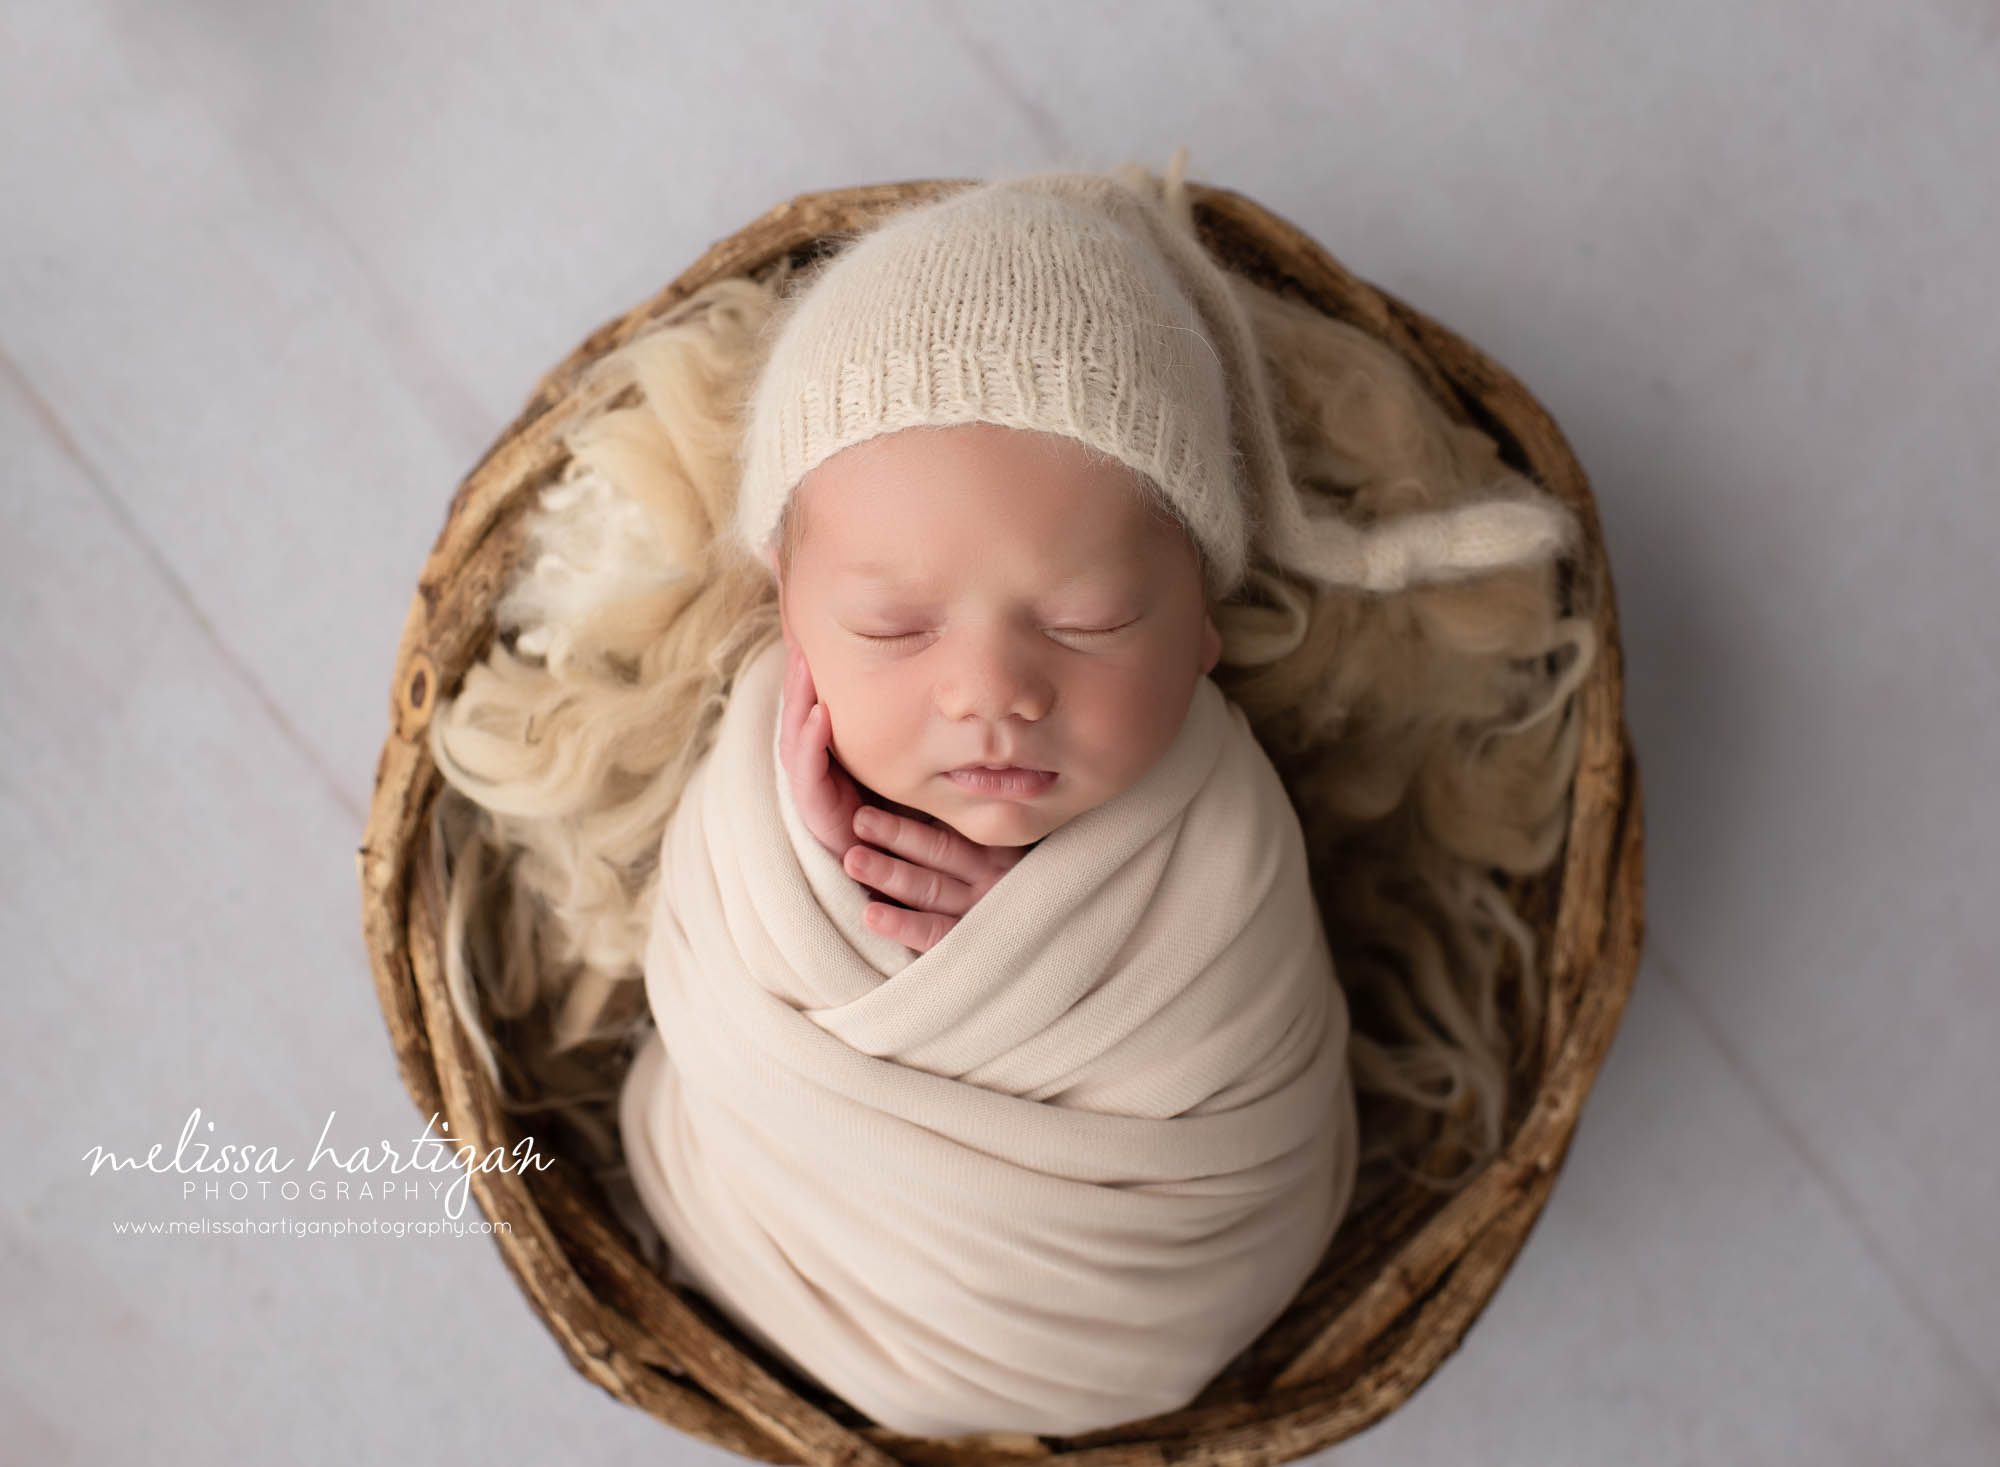 newborn baby boy wrapped in beige wrap with knitted beige sleepy cap posed in basket CT newborn photographer